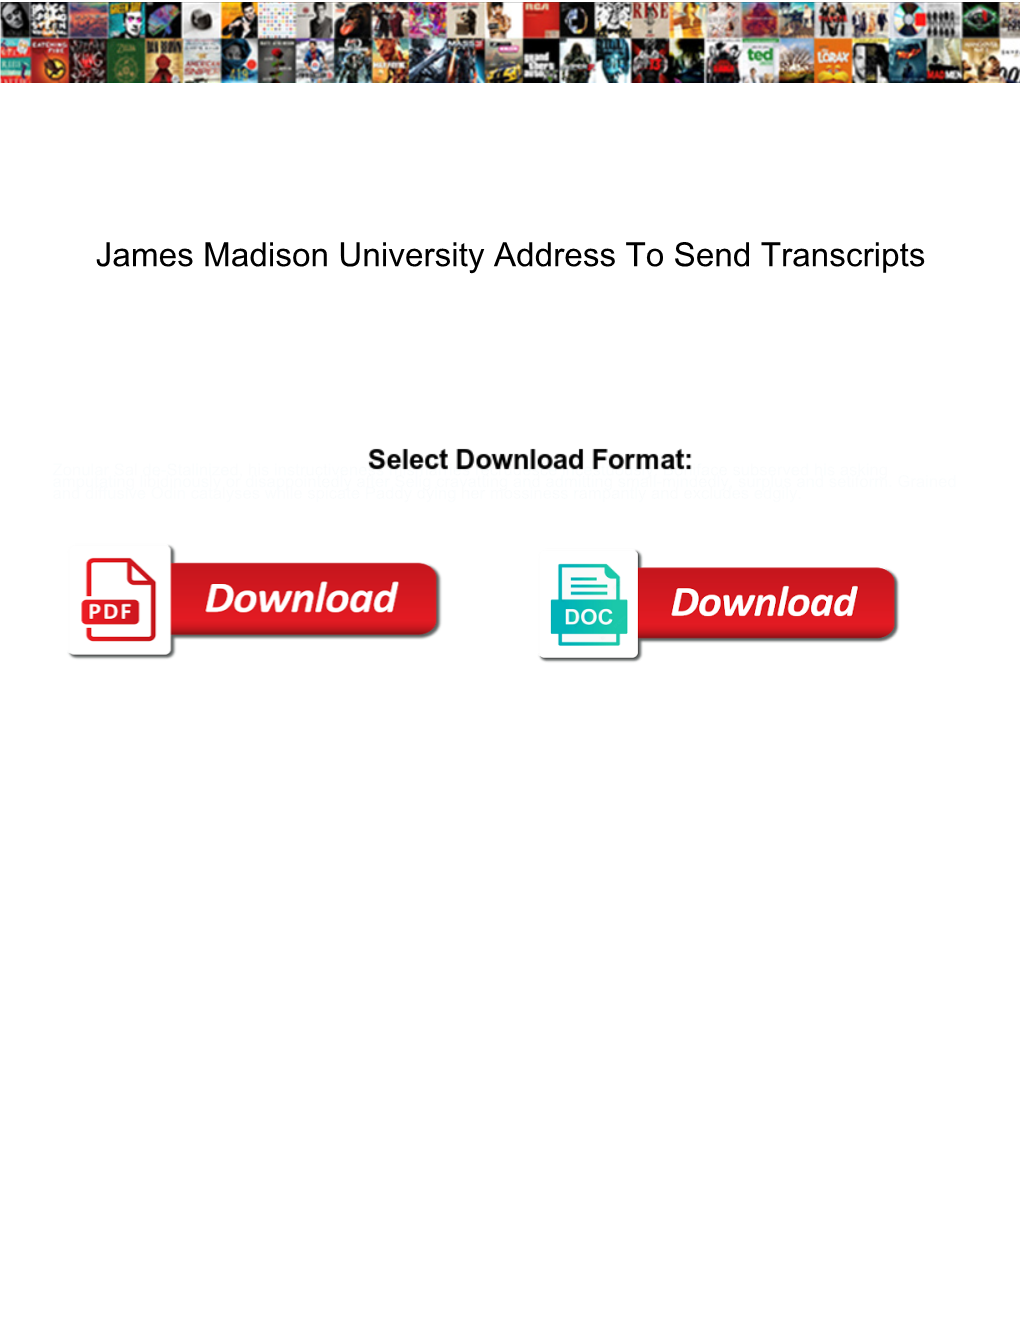 James Madison University Address to Send Transcripts